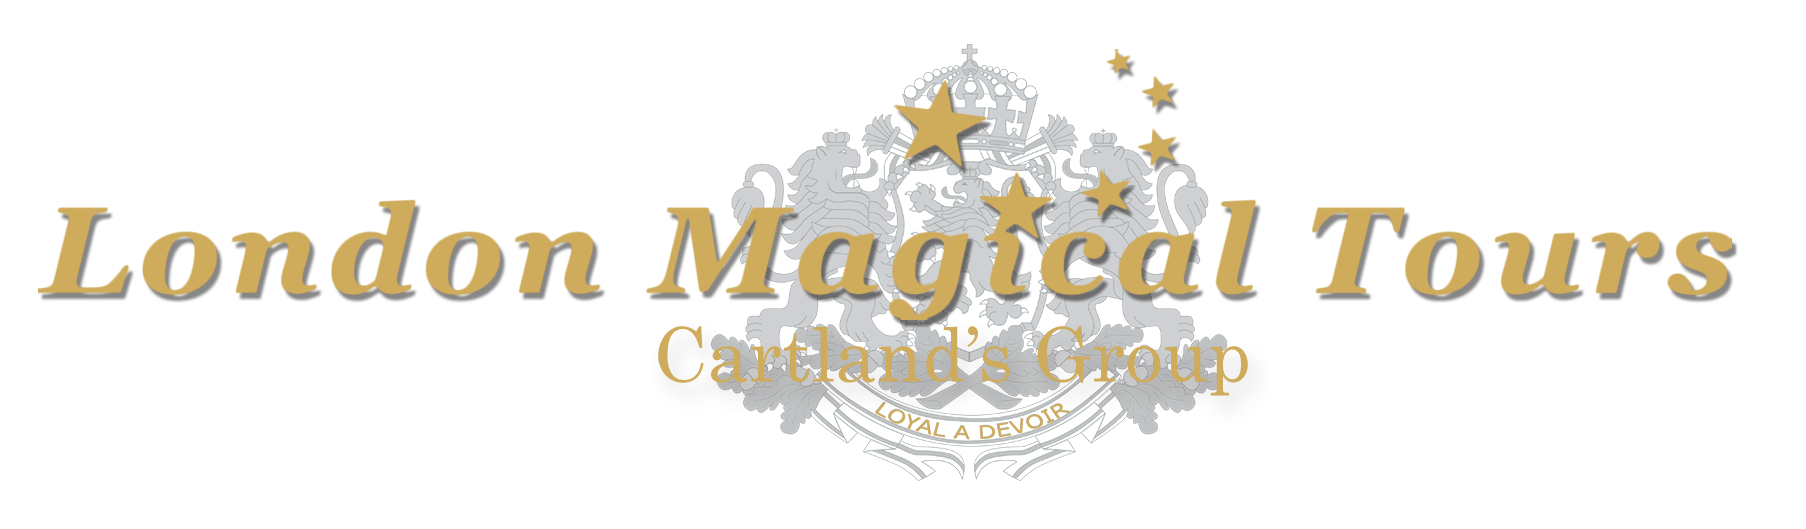 London Magical Tours Logo